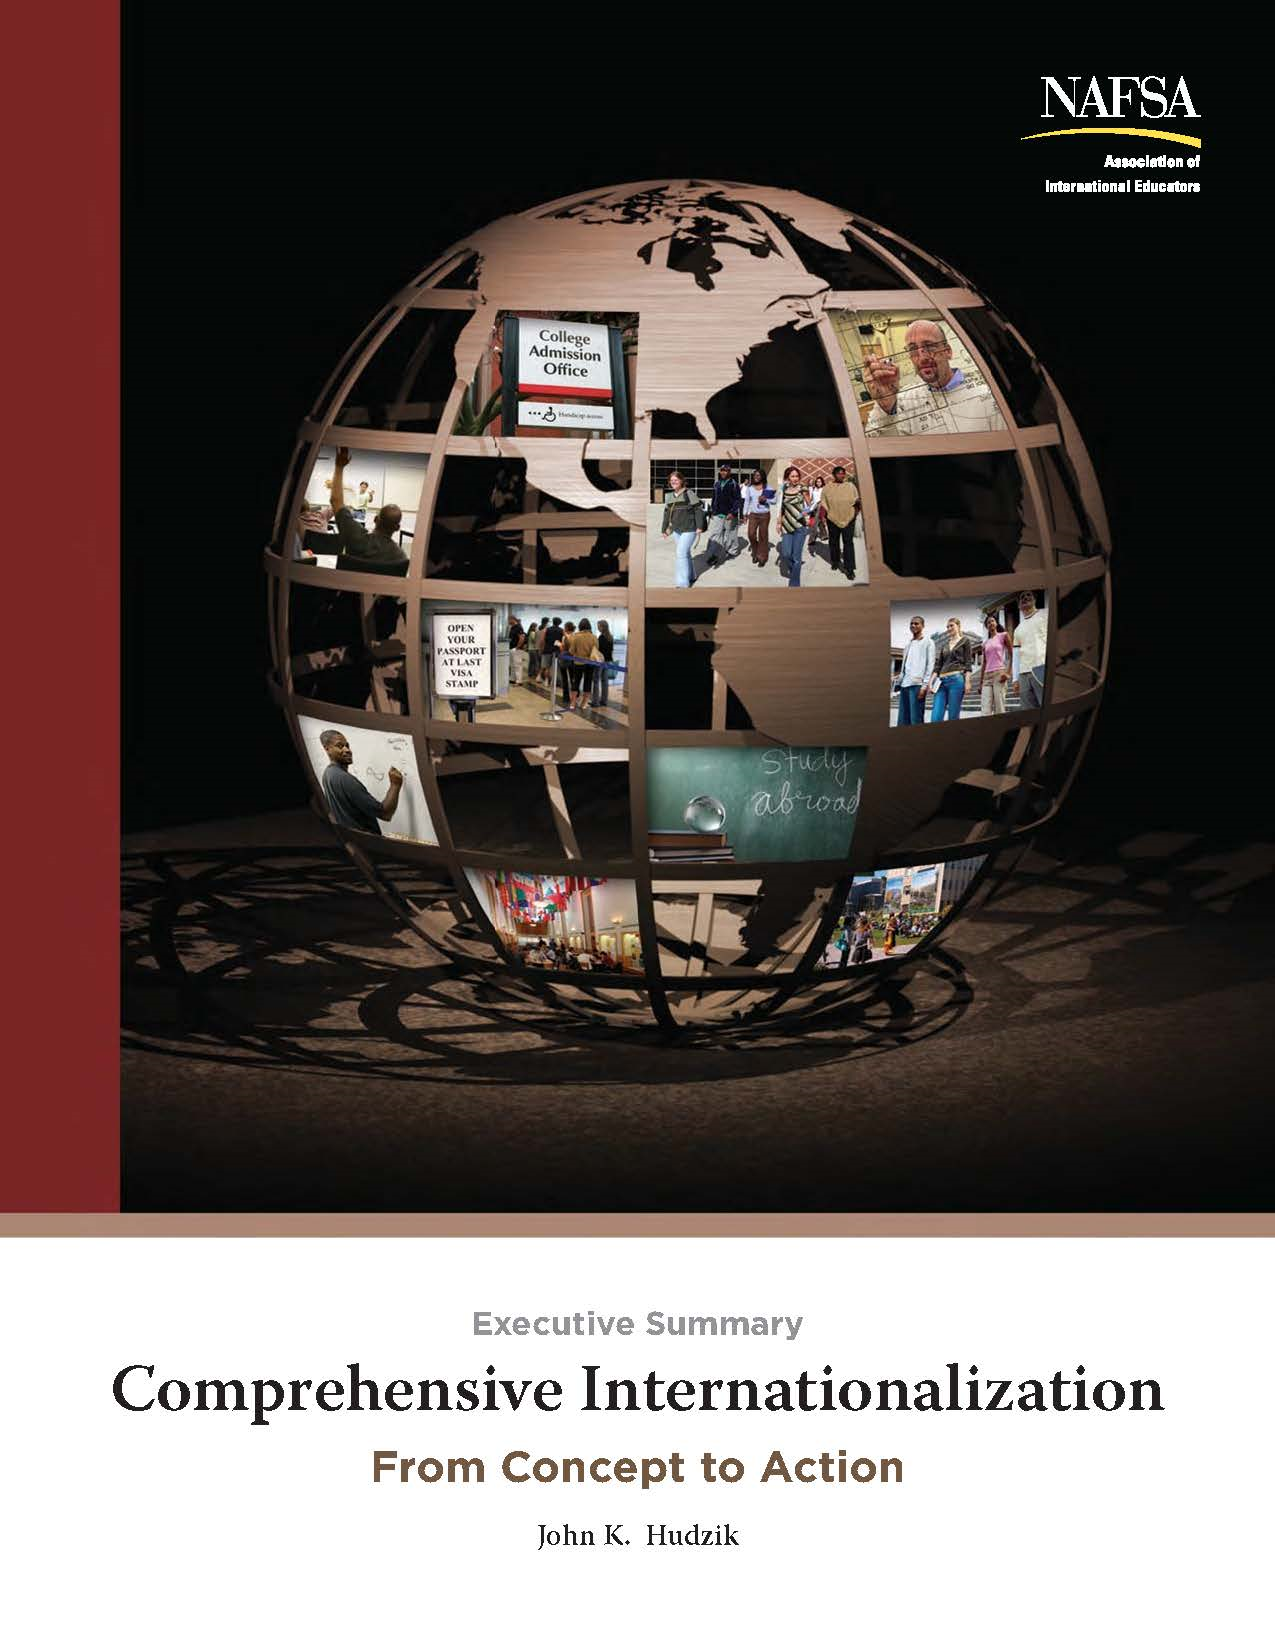 Exec. Summary Comprehensive Internationalization 